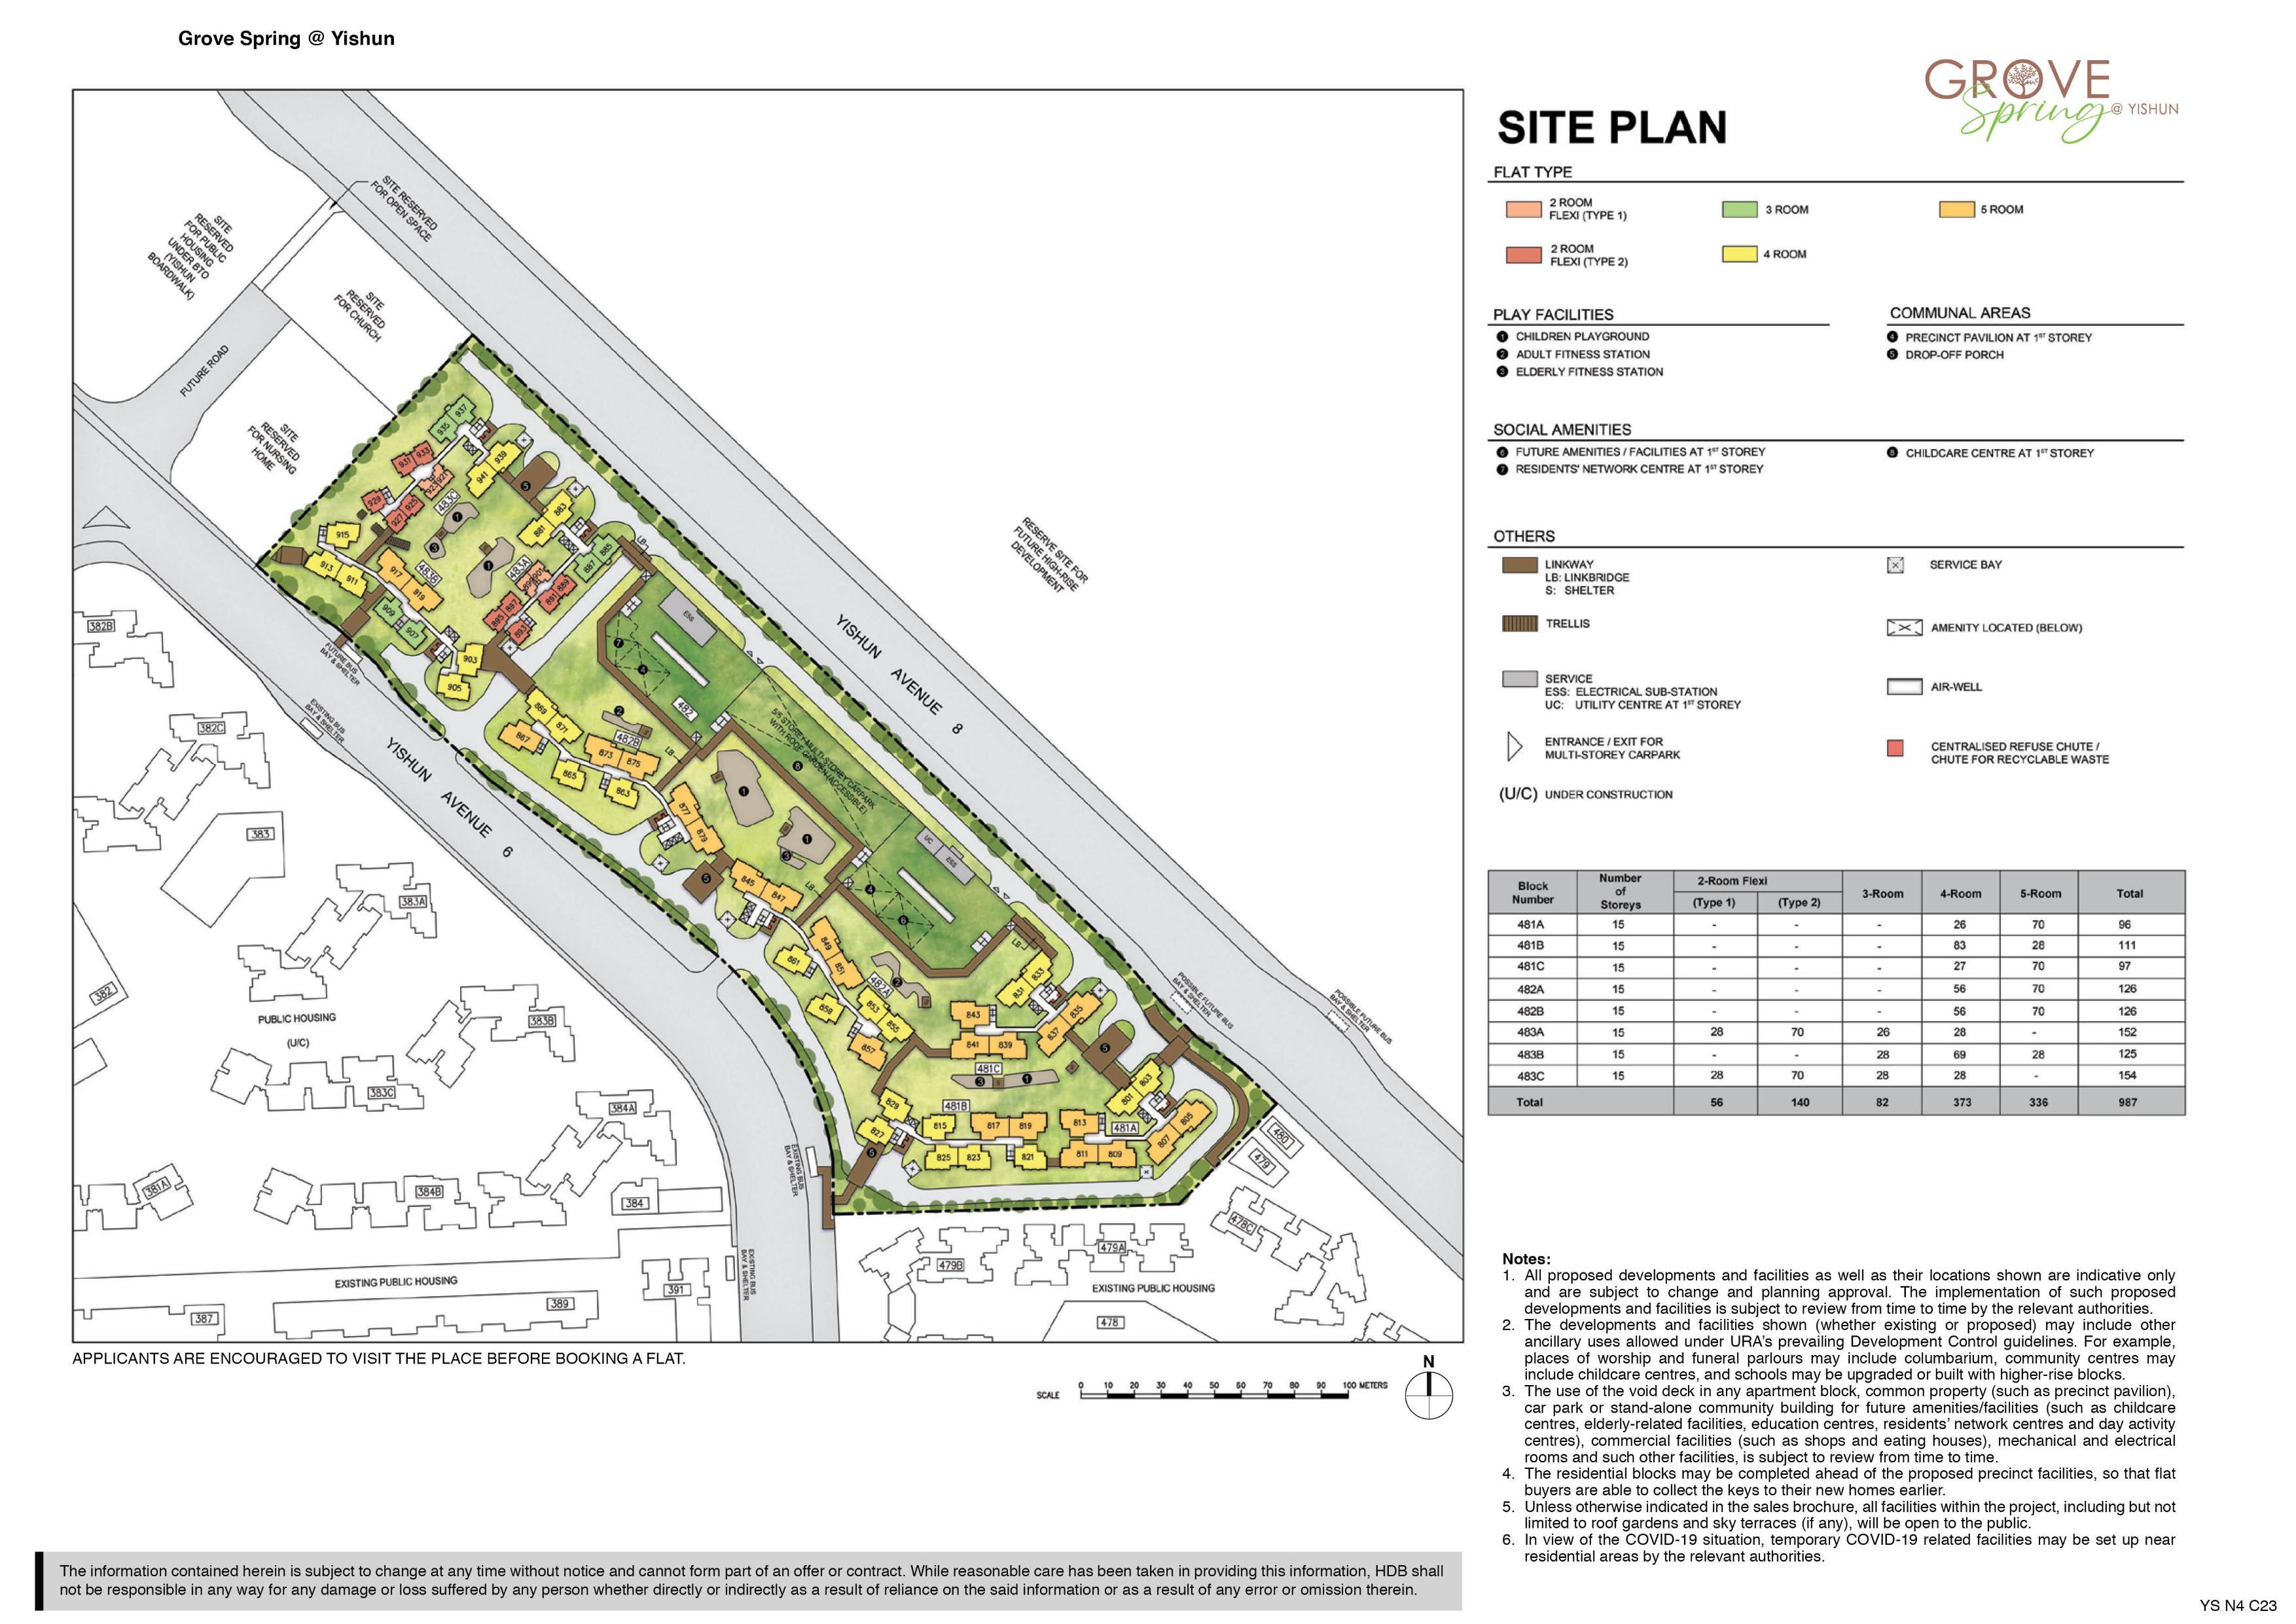 Grove Spring @ Yishun Site Plan